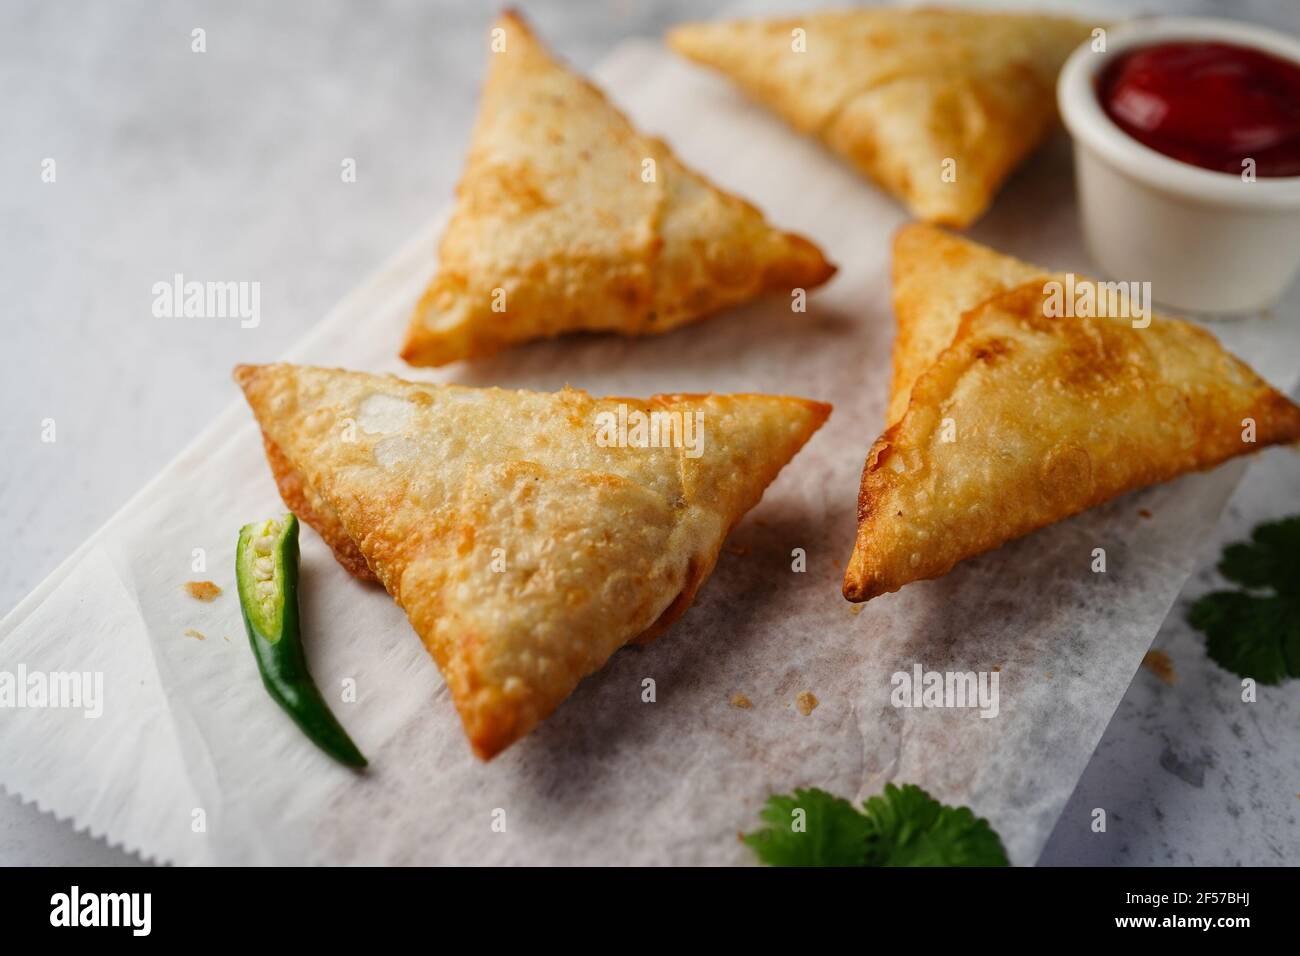 Homemade Samosas - Indian deep fried triangle pastries, selective focus Stock Photo